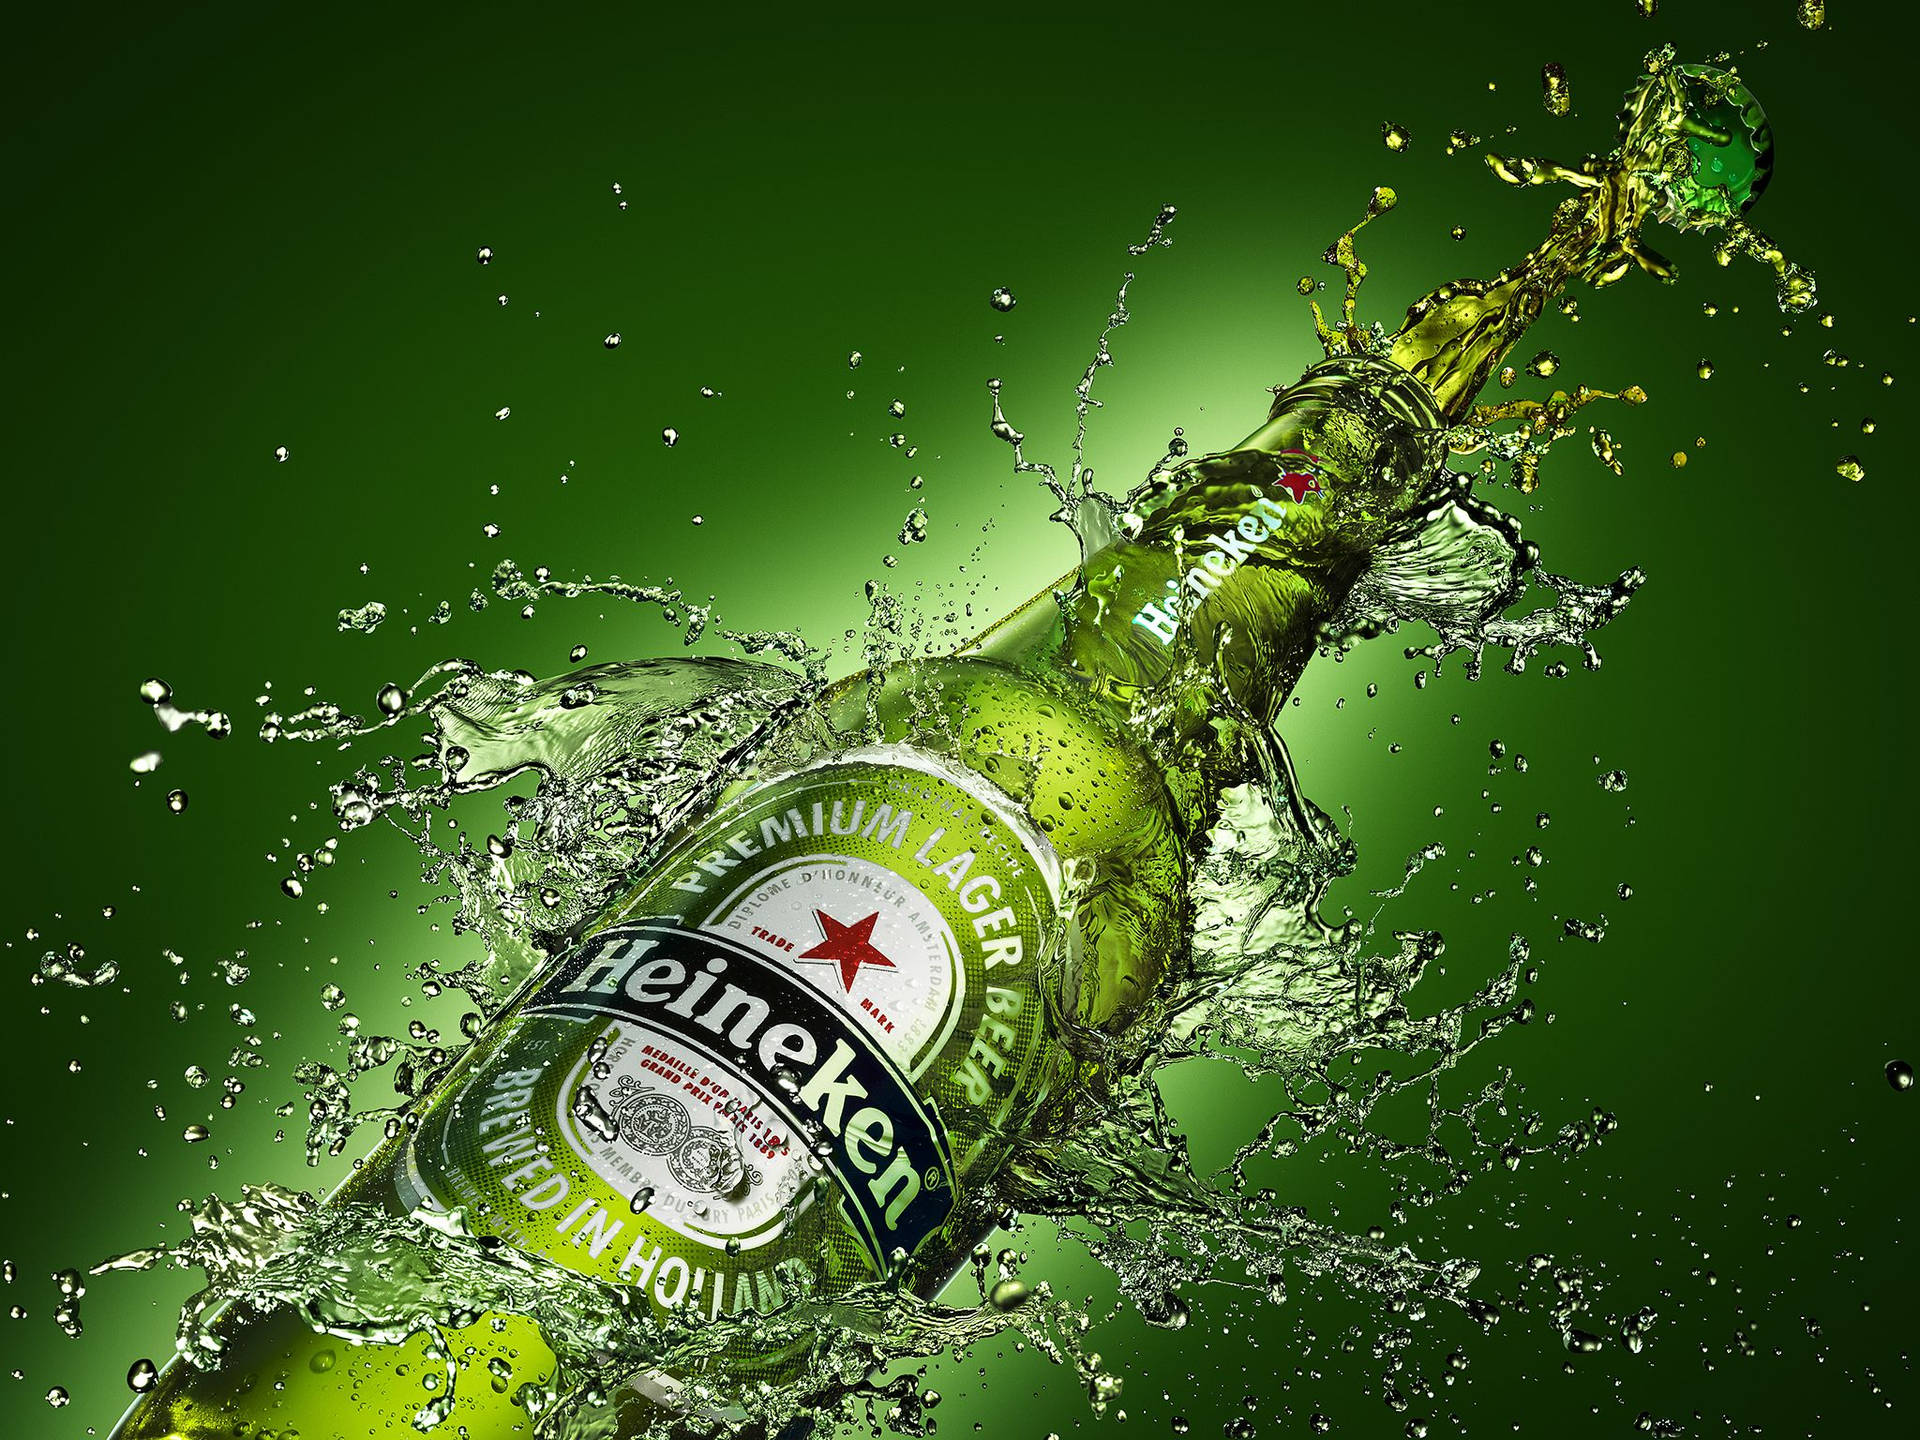 Heineken Lager Beer Rippling Water Effect Wallpaper